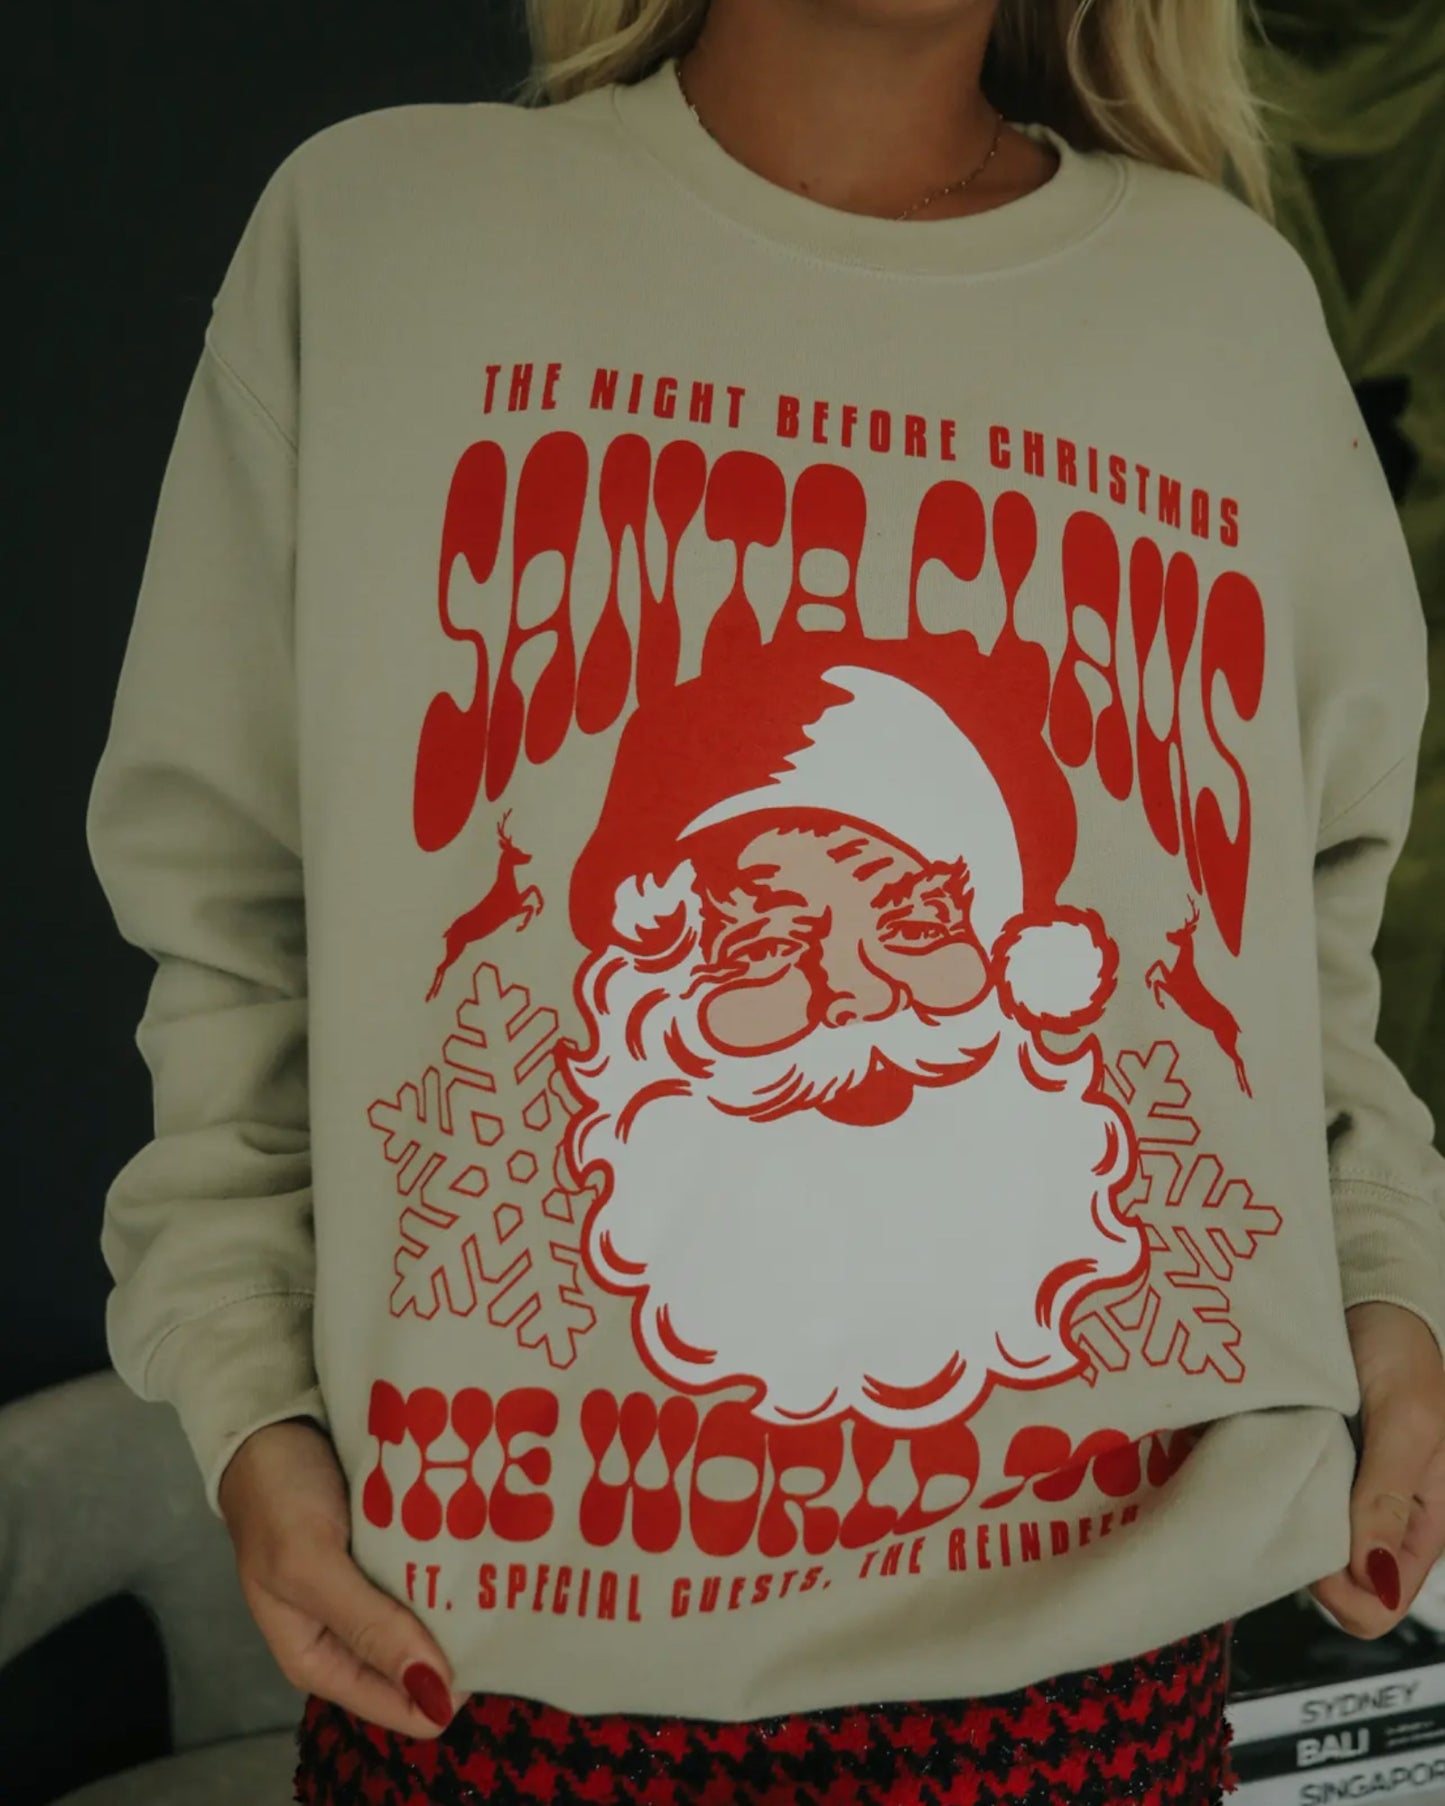 Santa Claus World Tour Sweatshirt